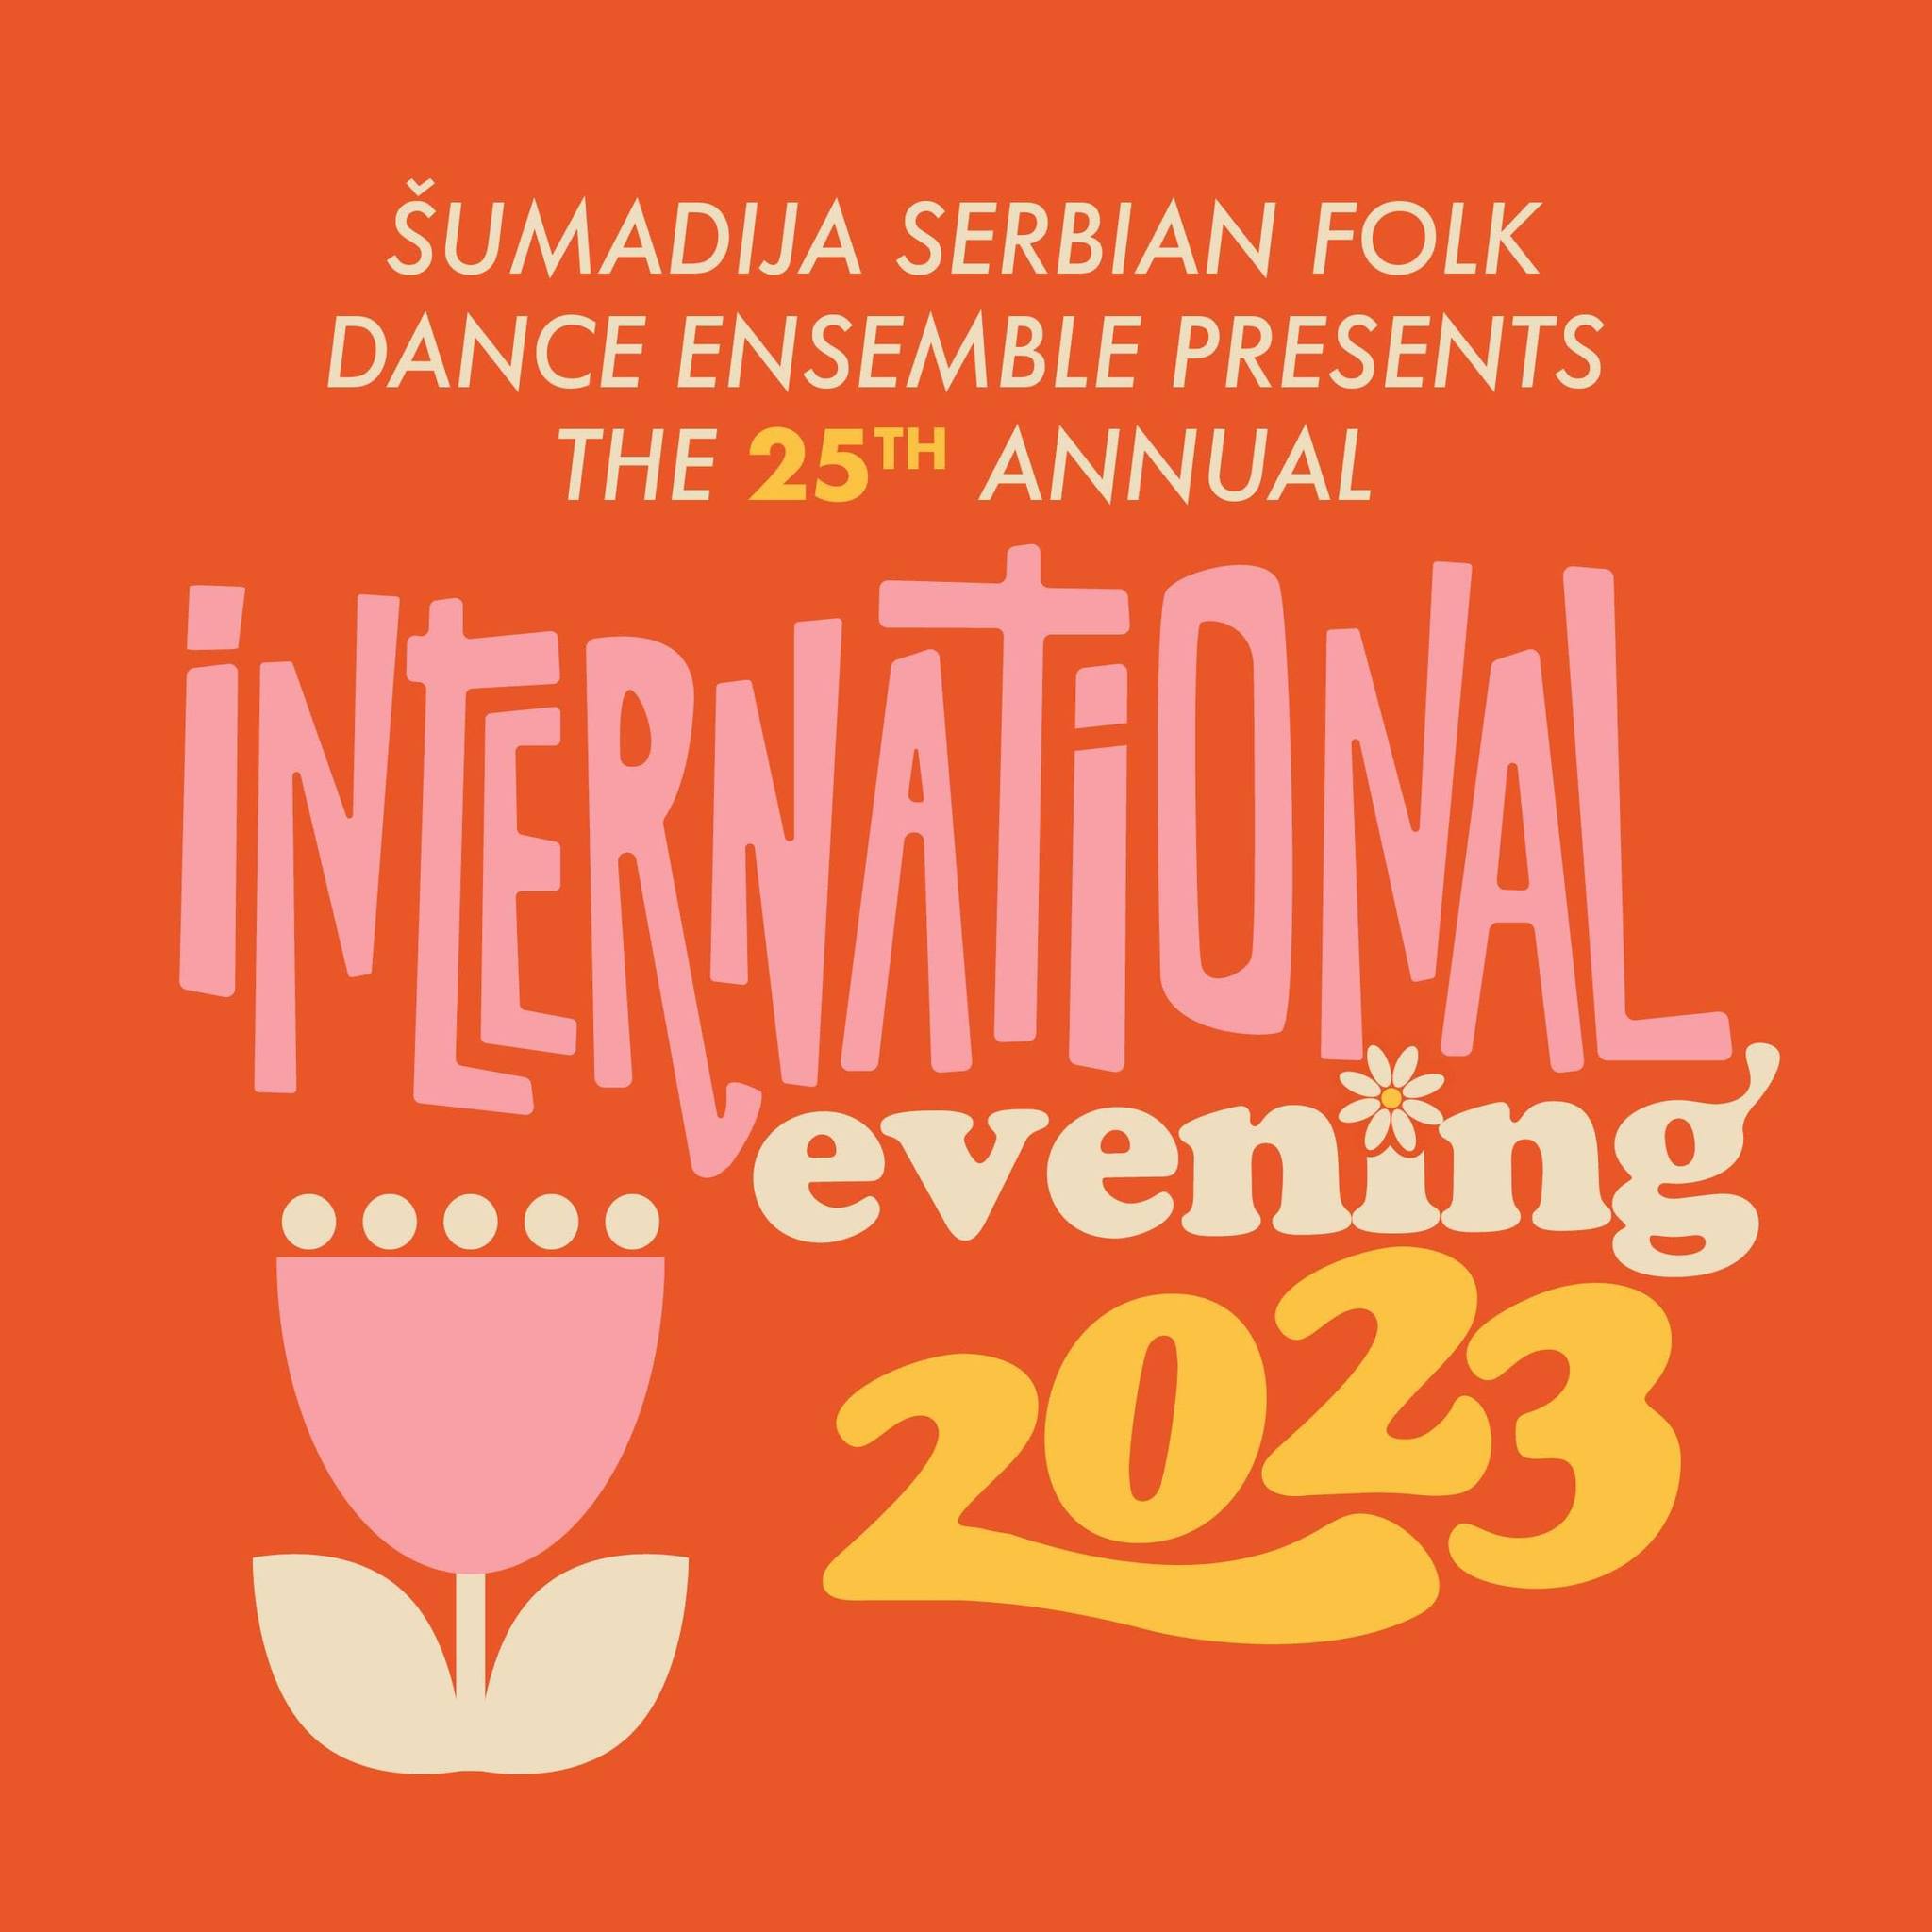 SUMADIJA SERBIAN FOLK DANCE ENSEMBLE PRESENTS THE 25TH ANNUAL INTERNATIONAL EVENING 2023